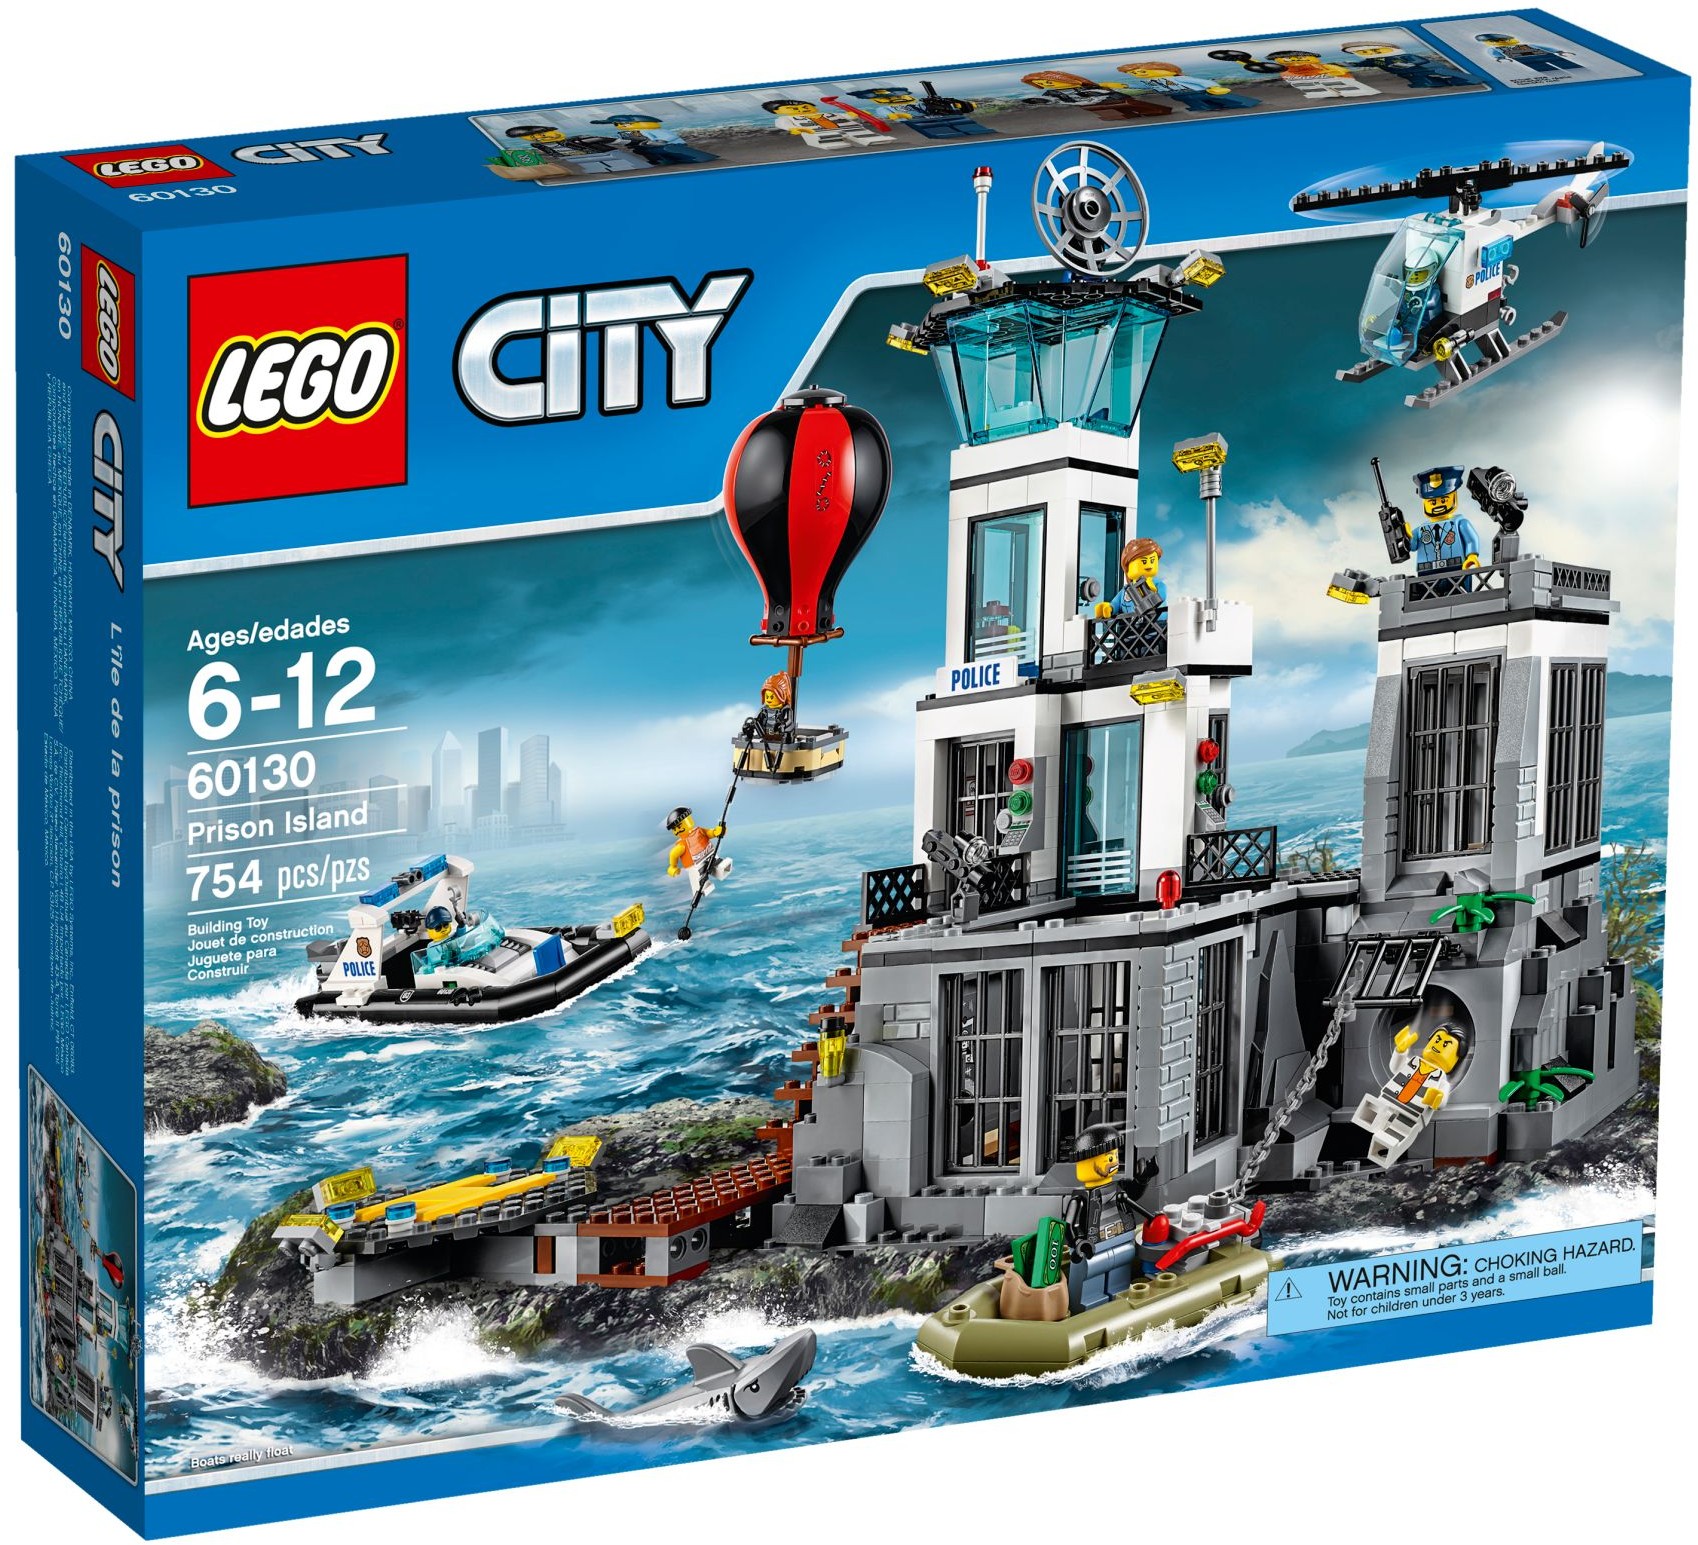 LEGO City 2016 Prison Island 60130 Set Photos Preview! - Bricks and Bloks